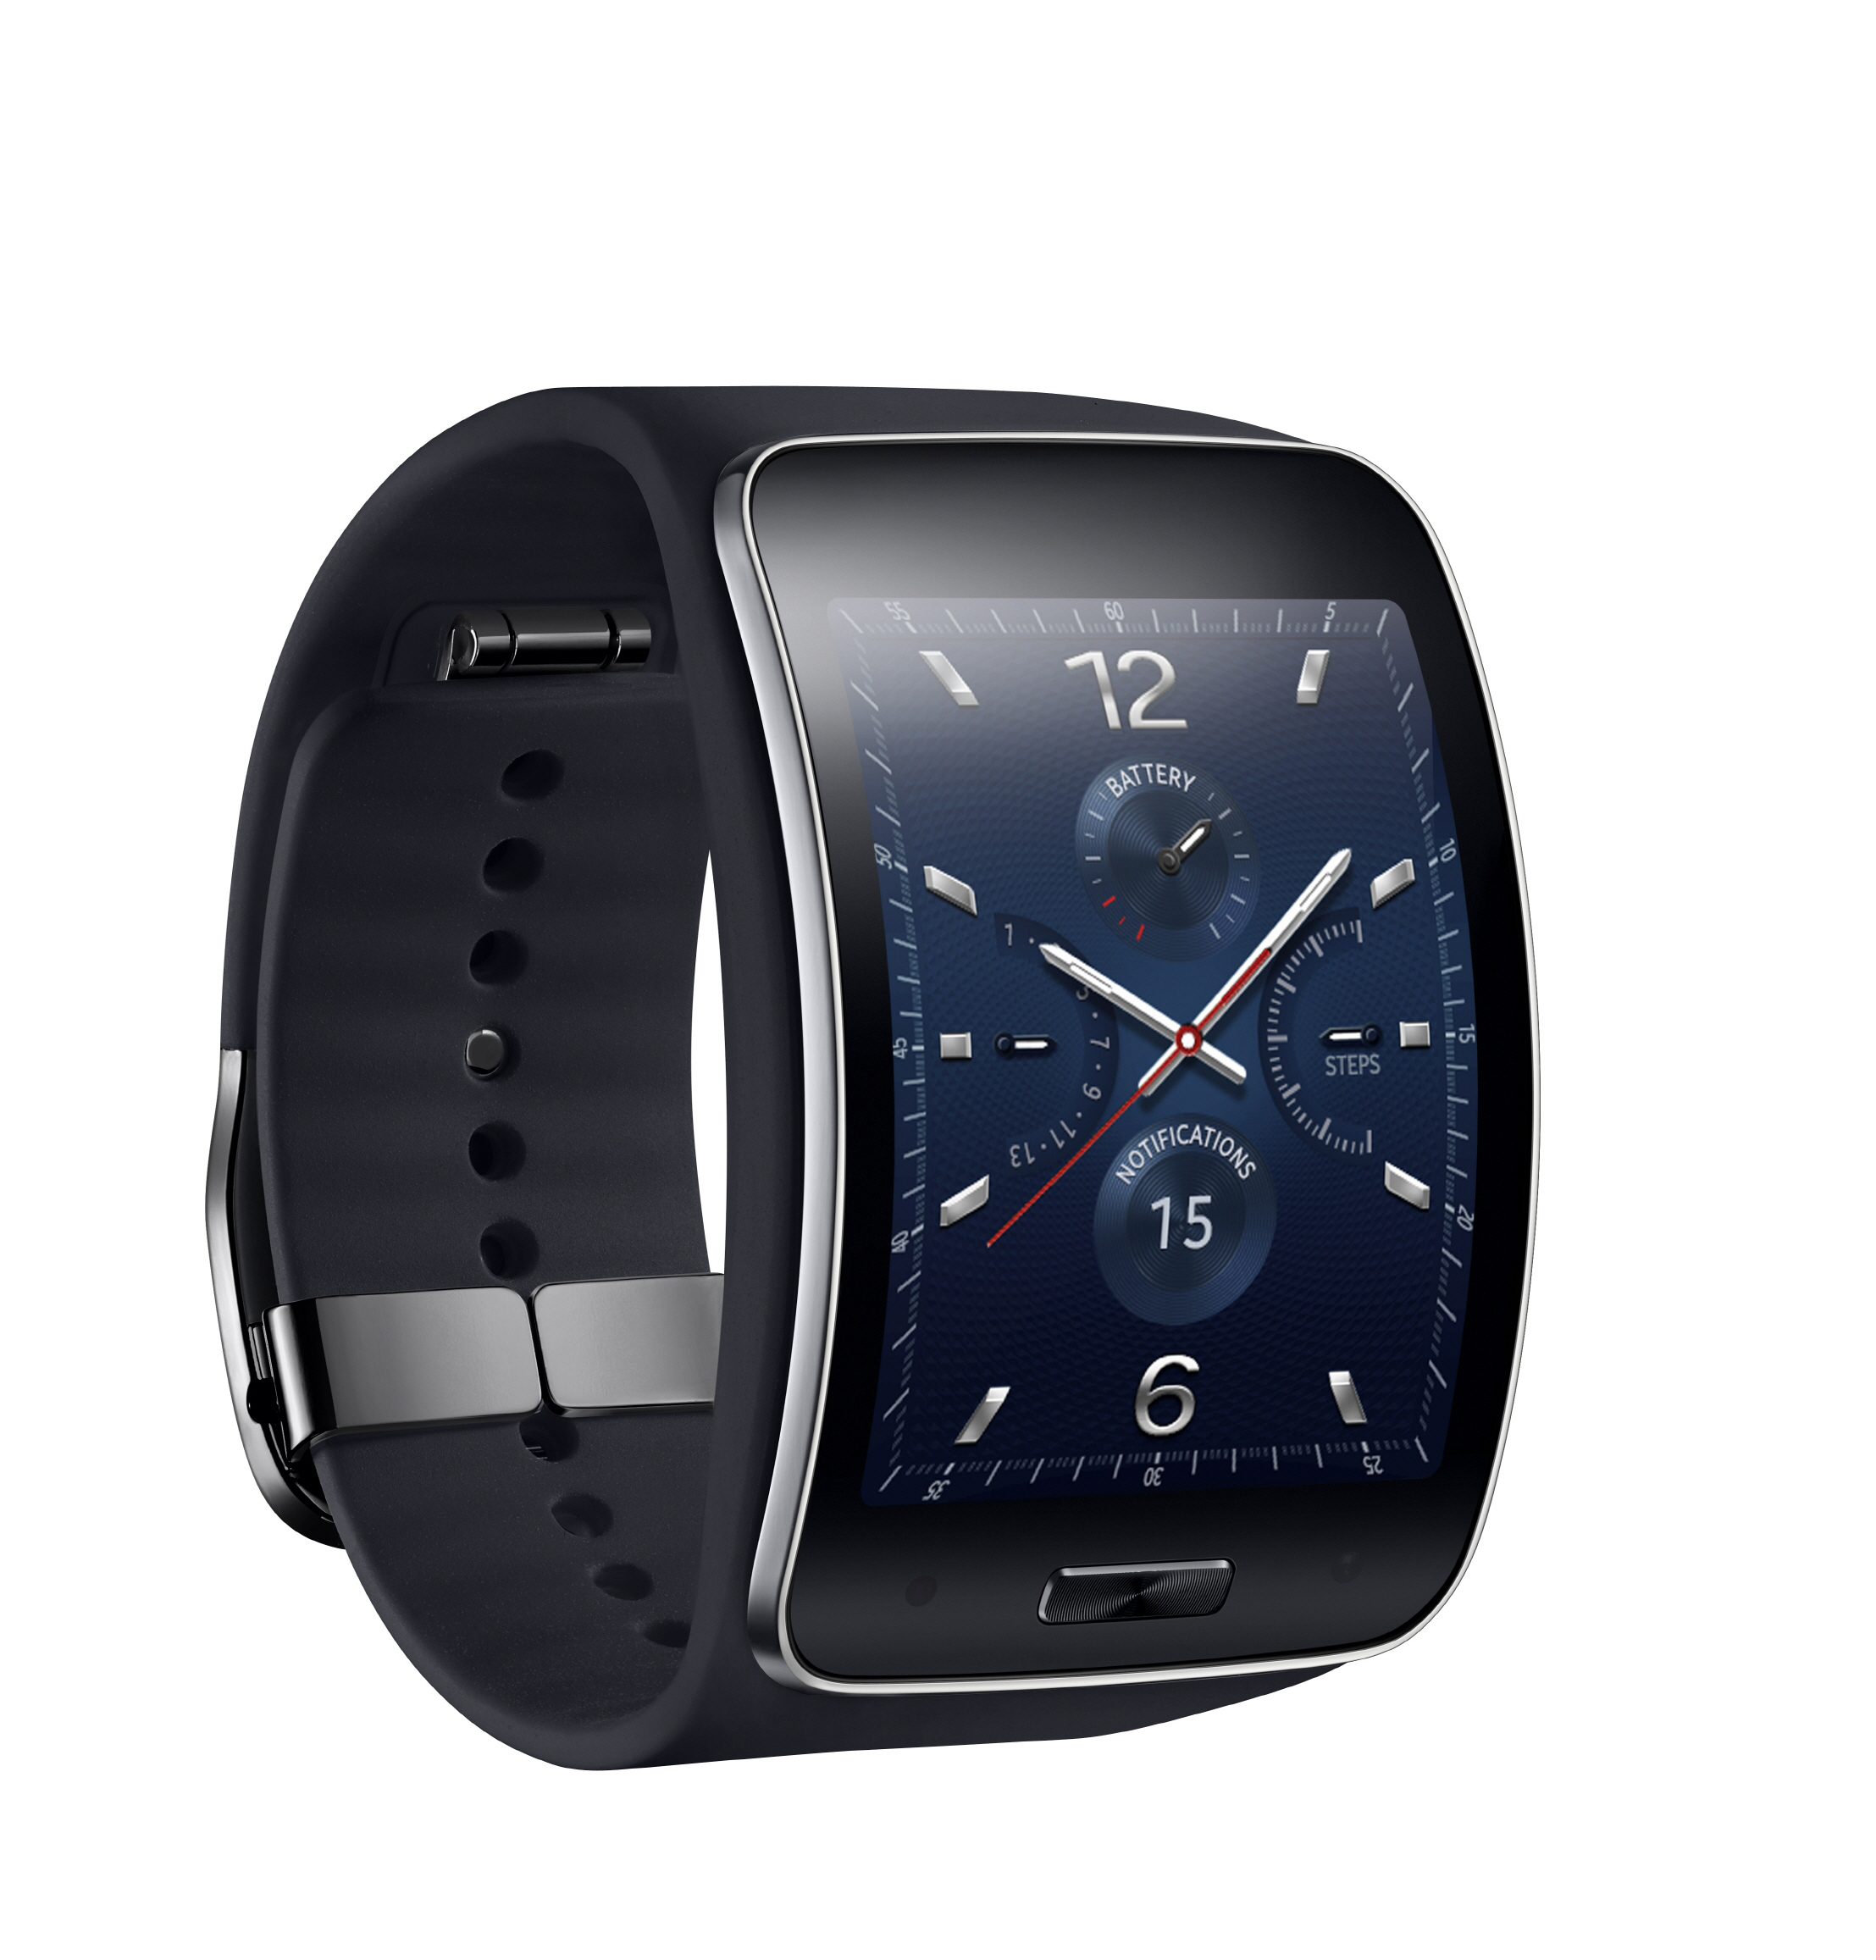 New York New Samsung Smartwatch Won't Need Companion Phone